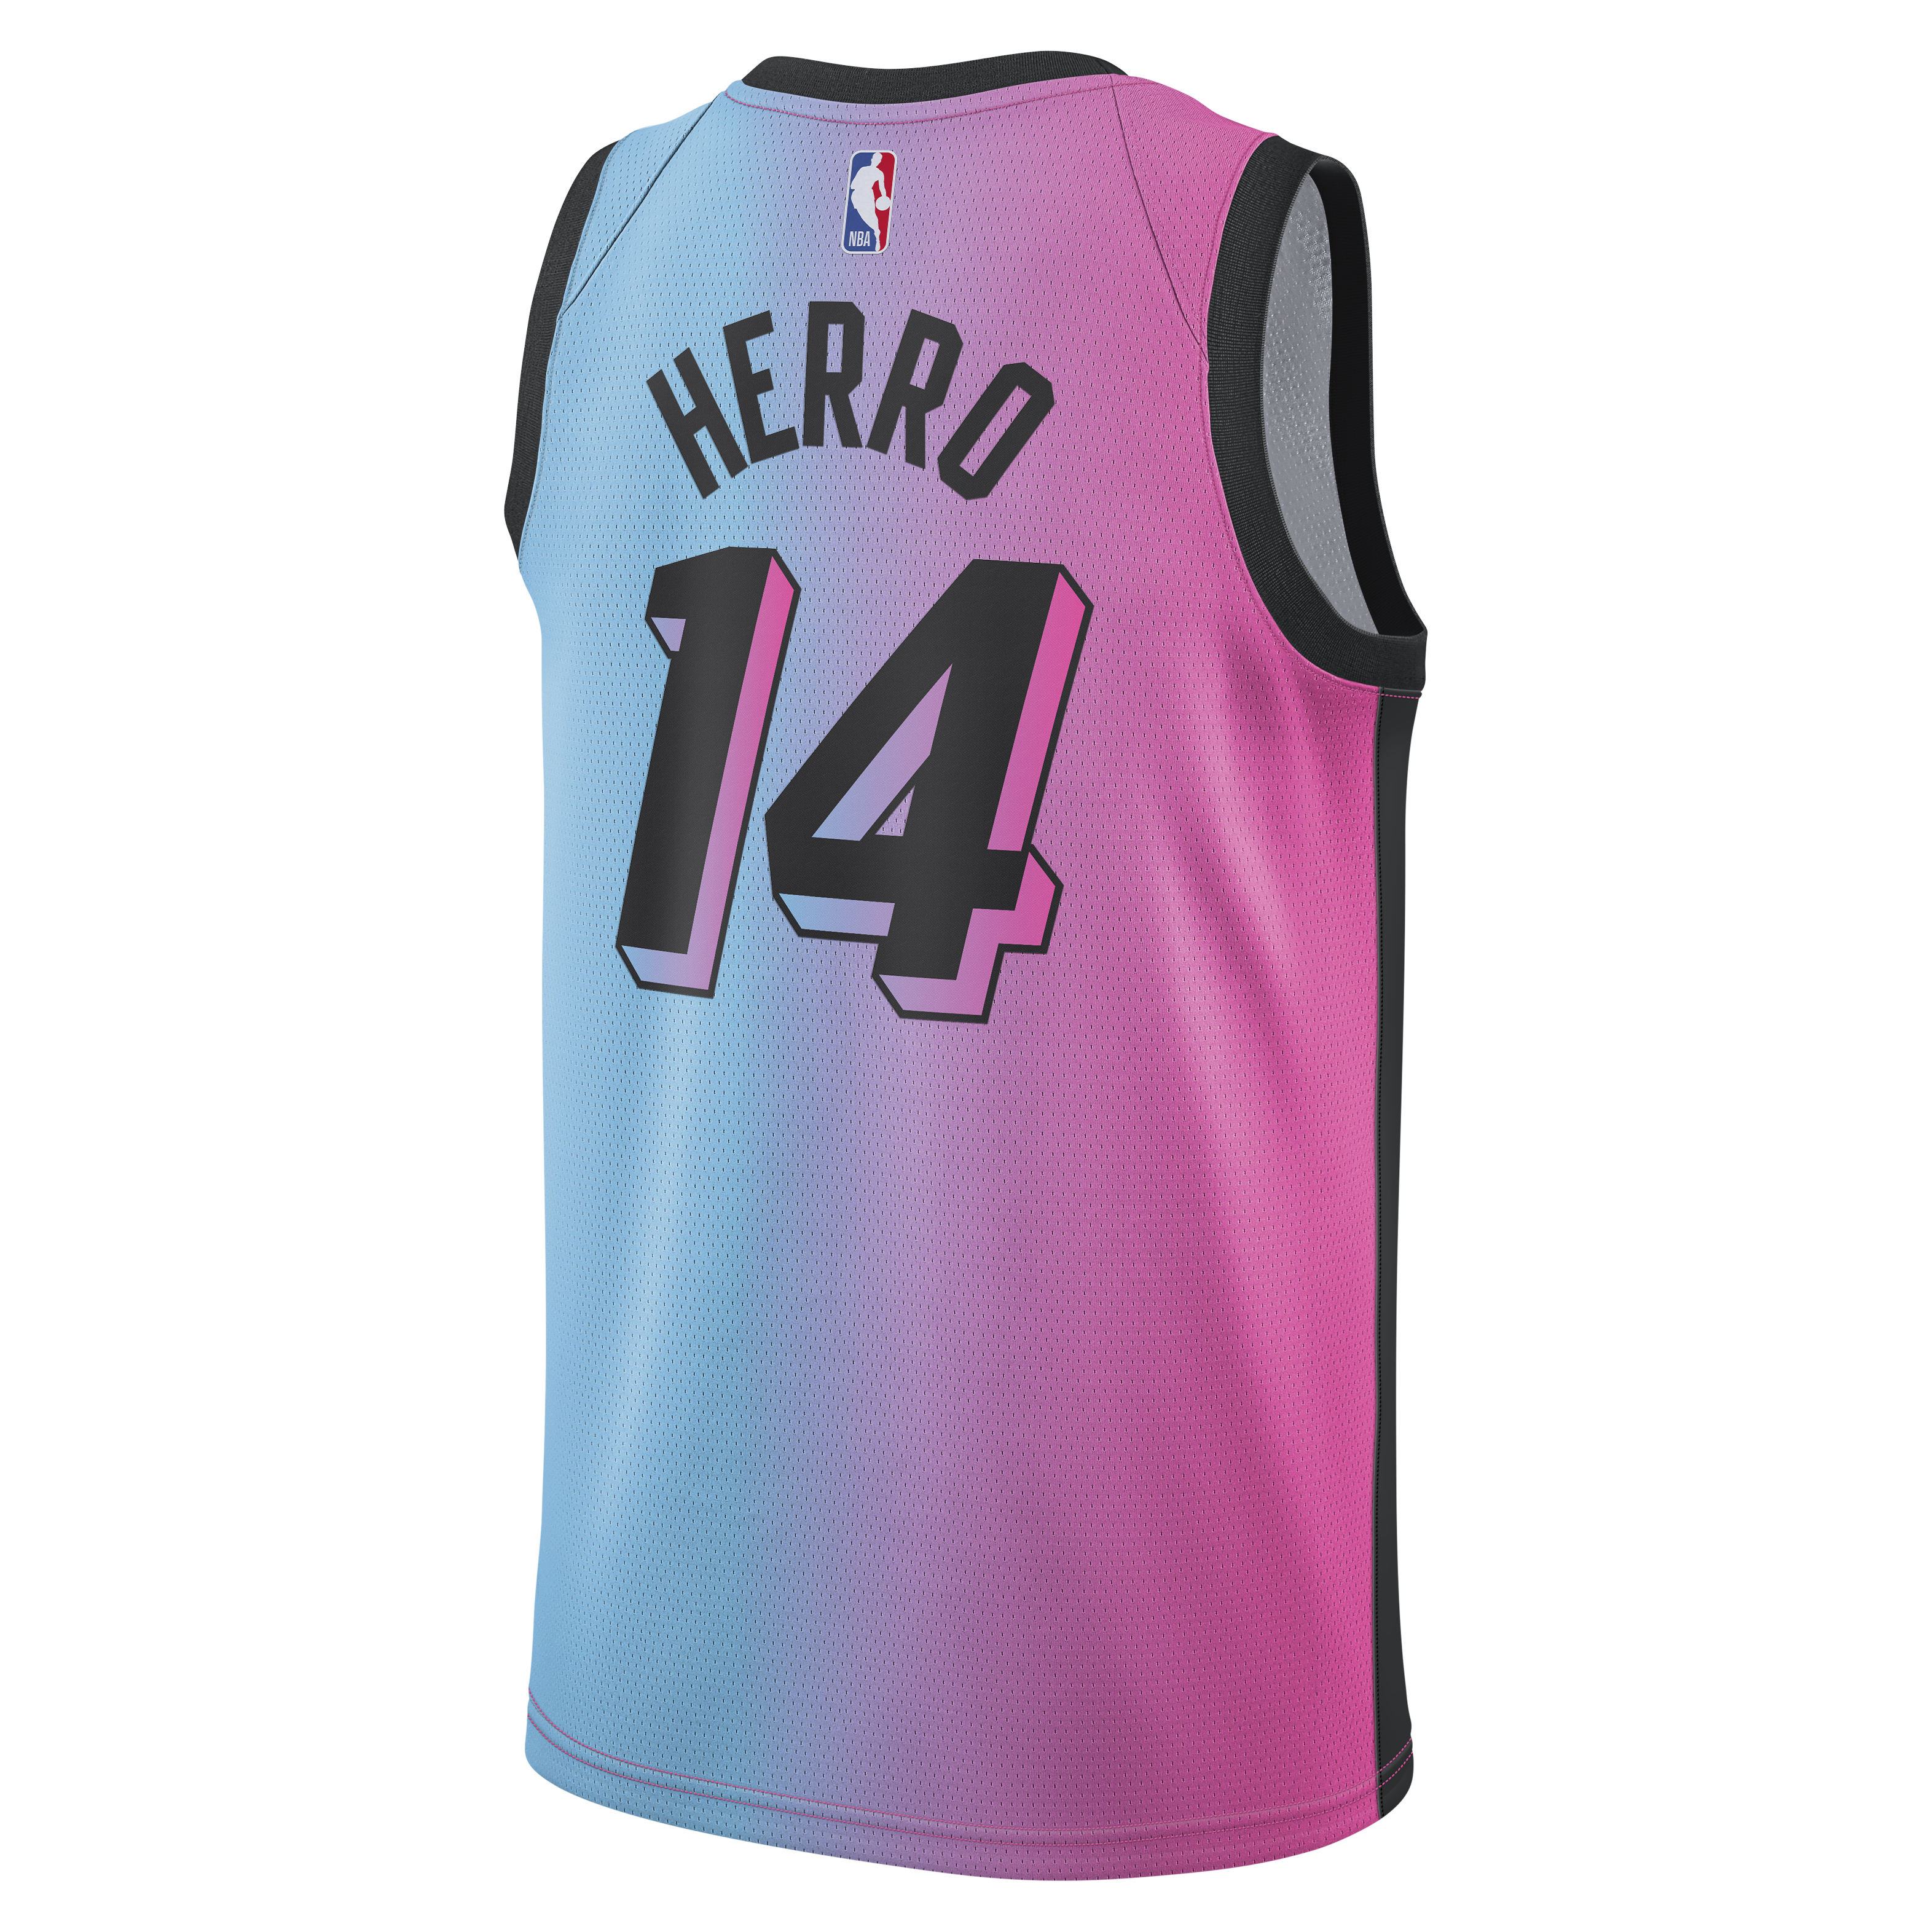 Tyler Herro 2019-20 Miami Heat Nike Vice City Ed. Rookie Authentic Jersey  Sz 52